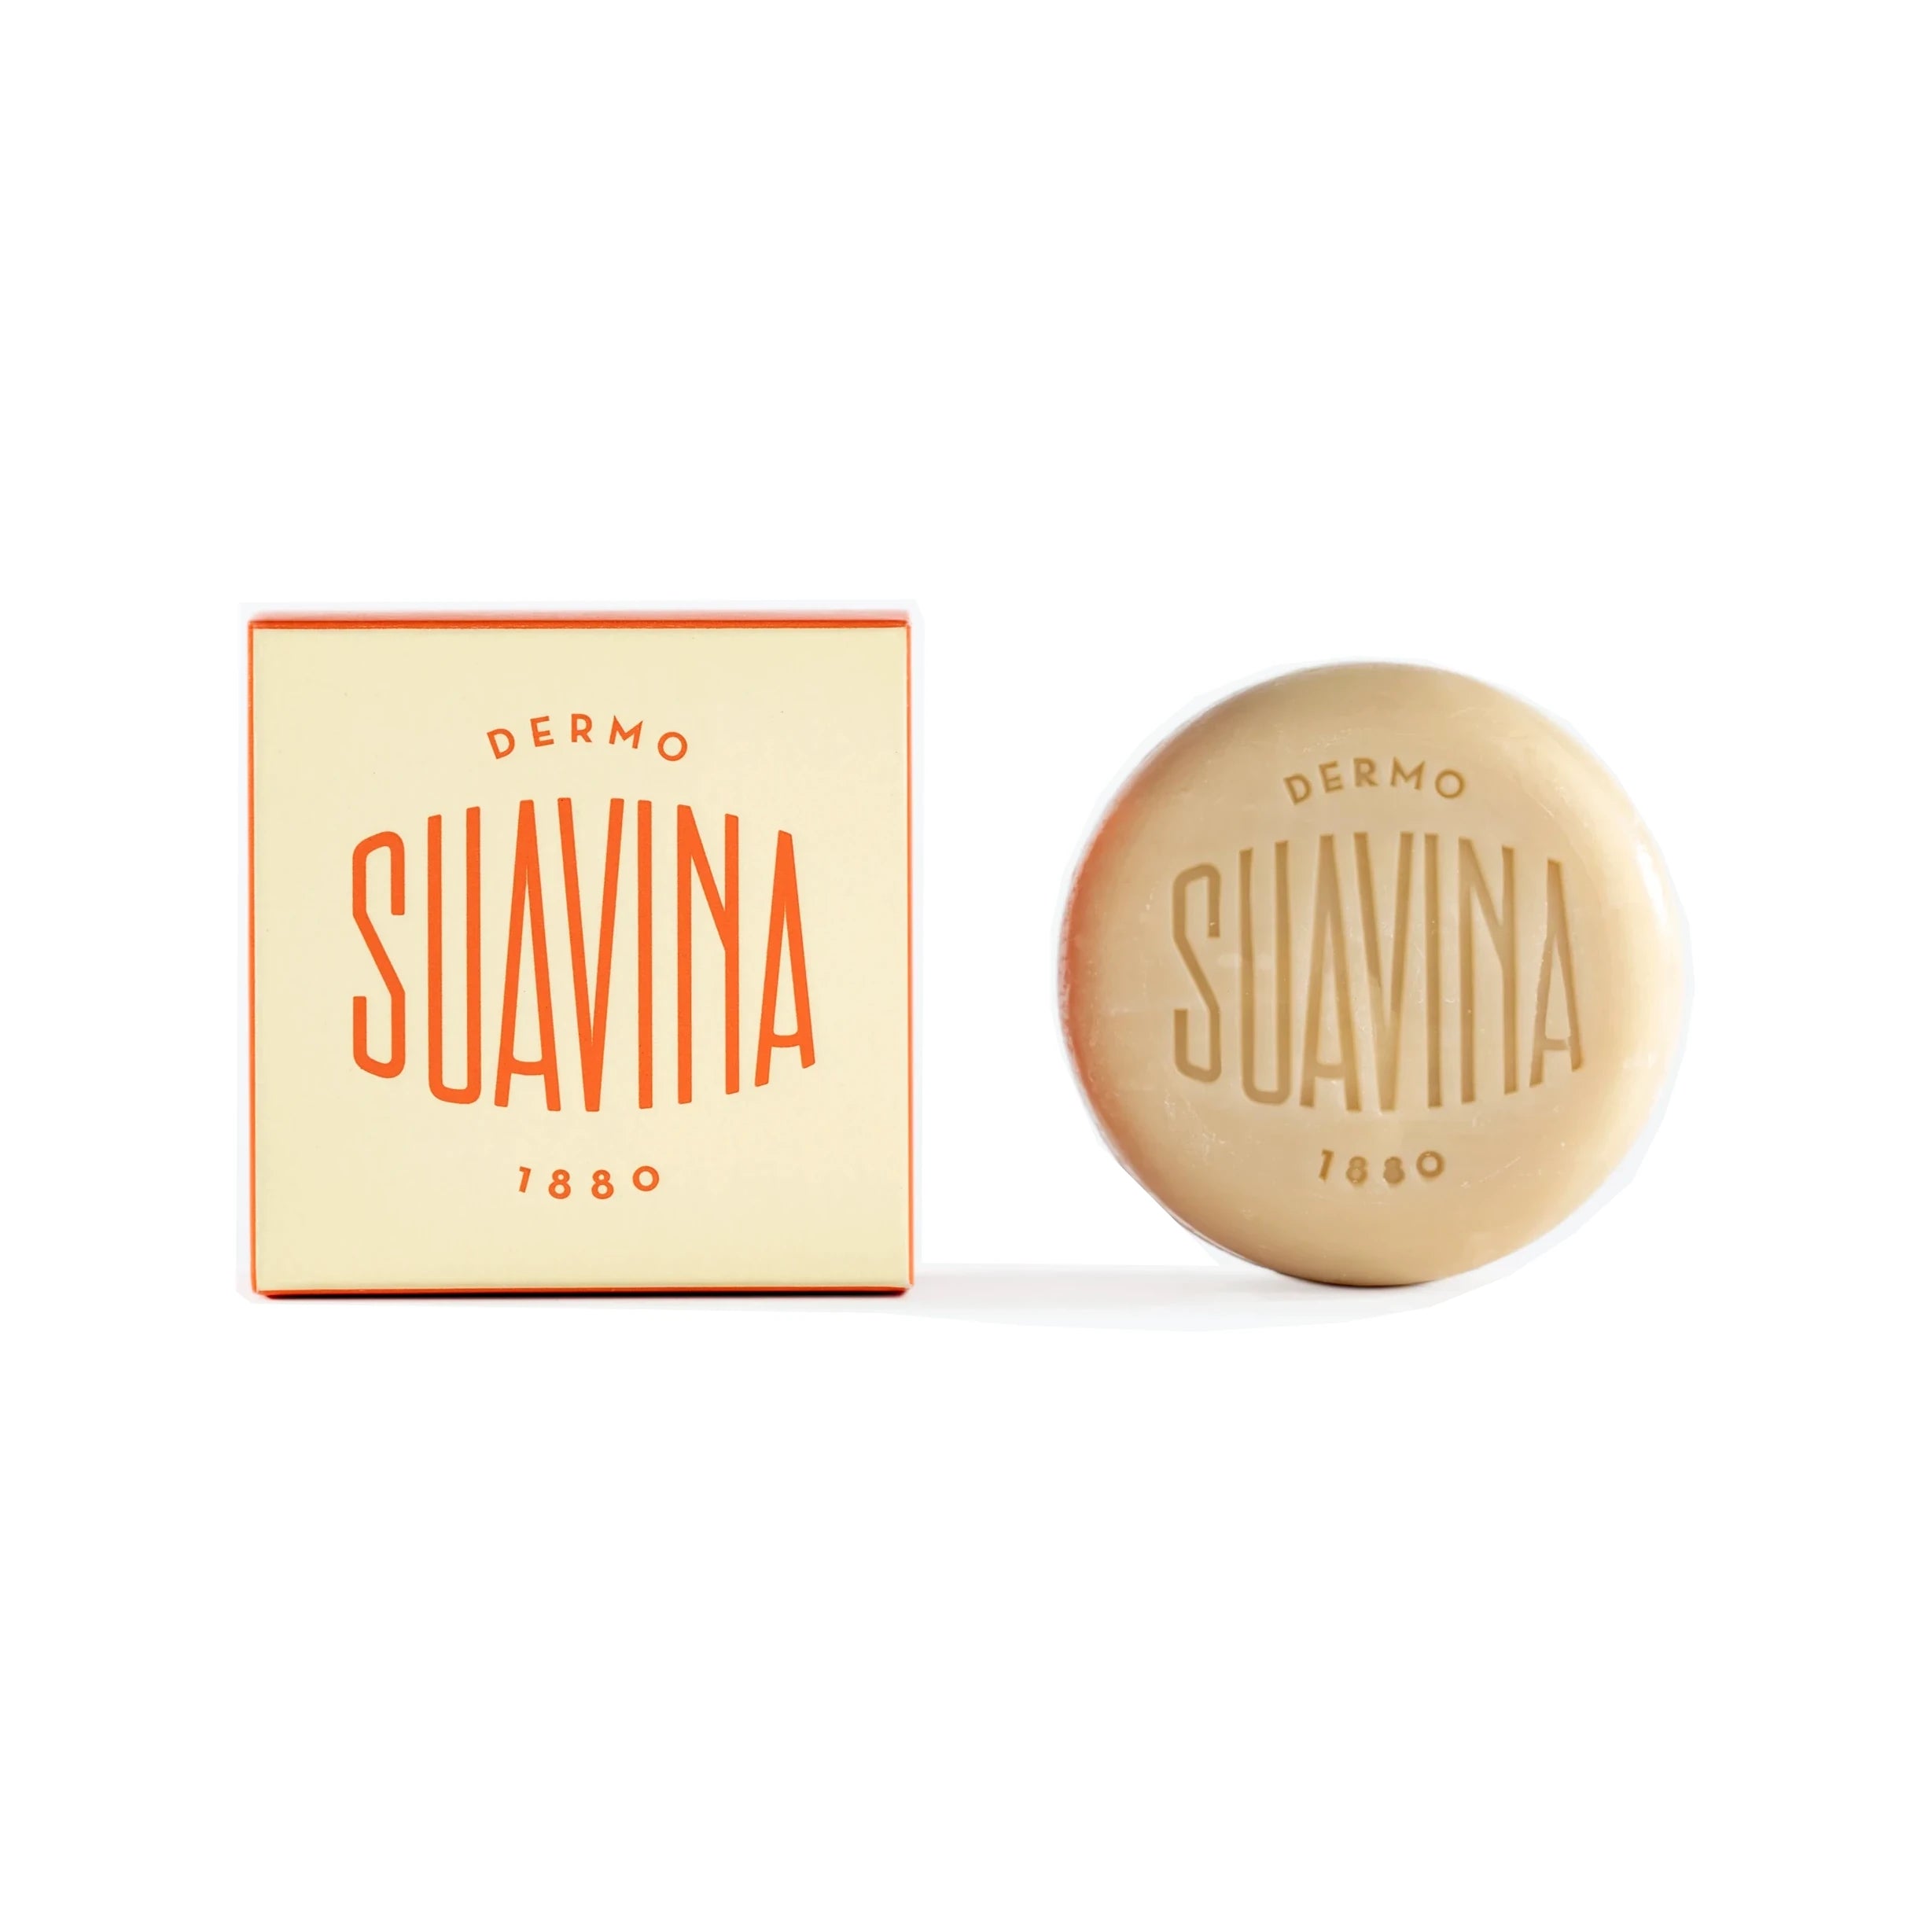 Dermo Suavina Original Soap bar and packaging at Lifestory Store Edinburgh